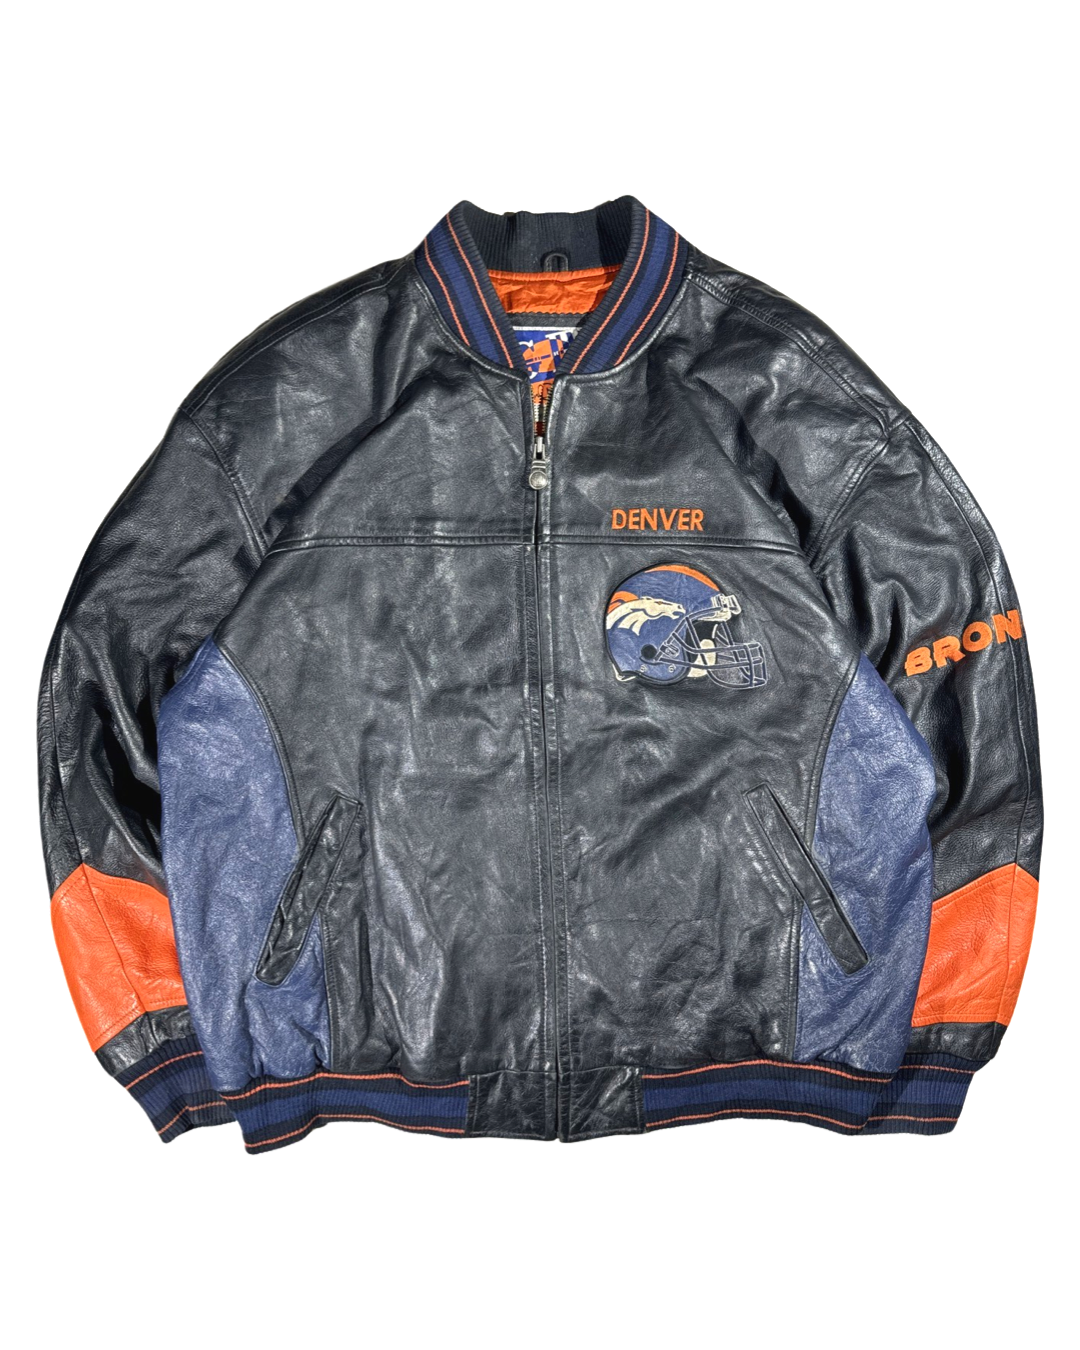 Vintage Broncos Leather Jacket - XL